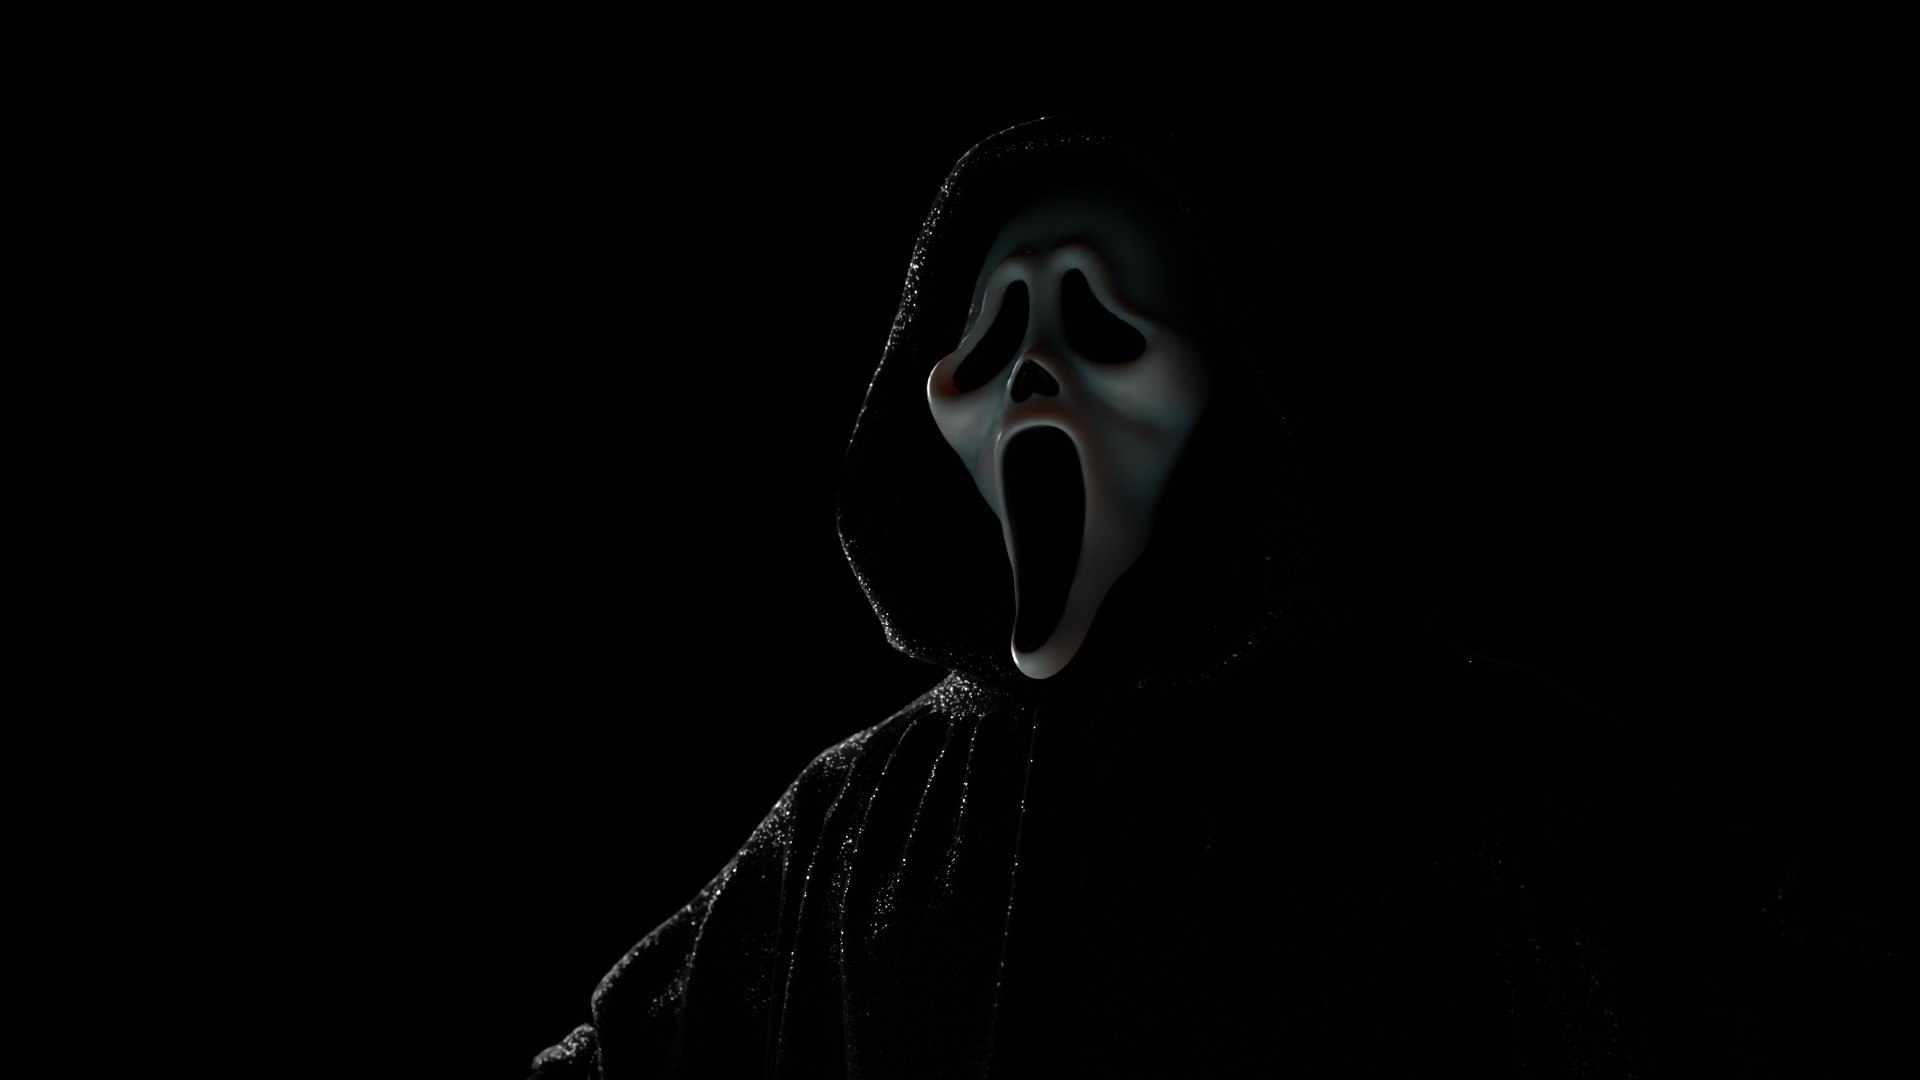 Scream 6 Ghostface Realistic Action Figure -  Denmark